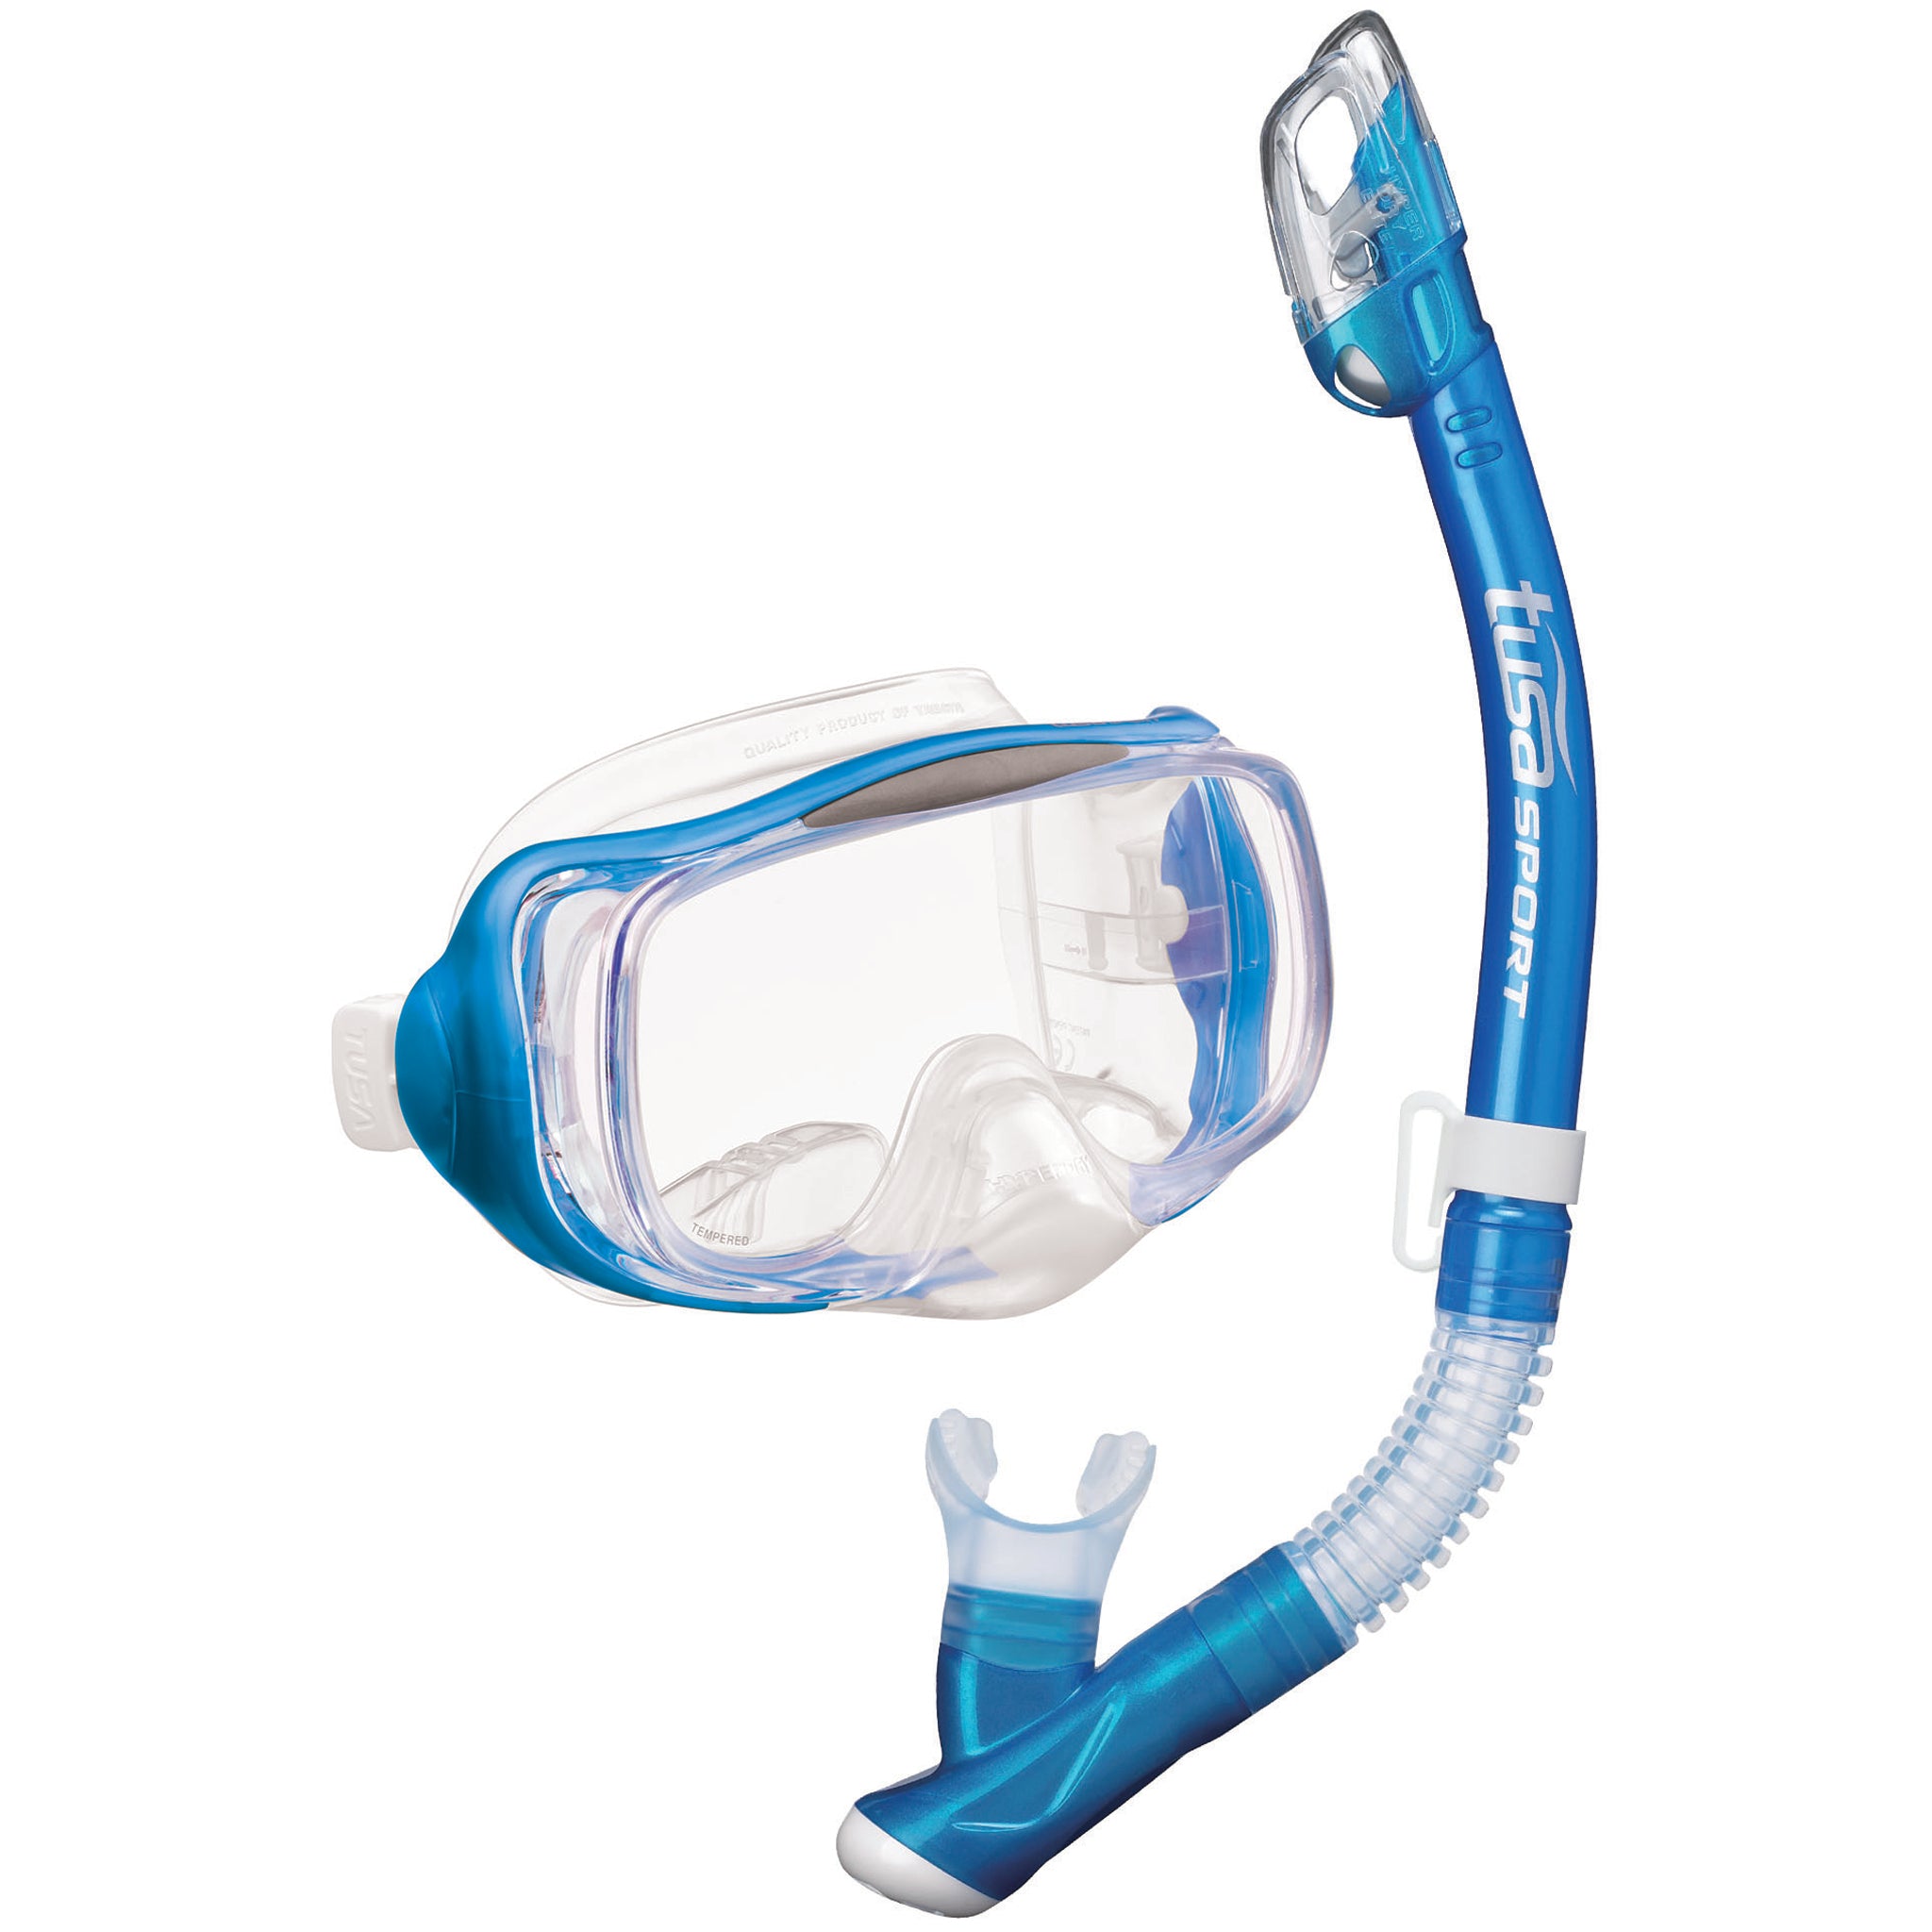 Tusa Imprex 3D Hyperdry Mask & Elite Dry Snorkel Set | Fishtail Blue